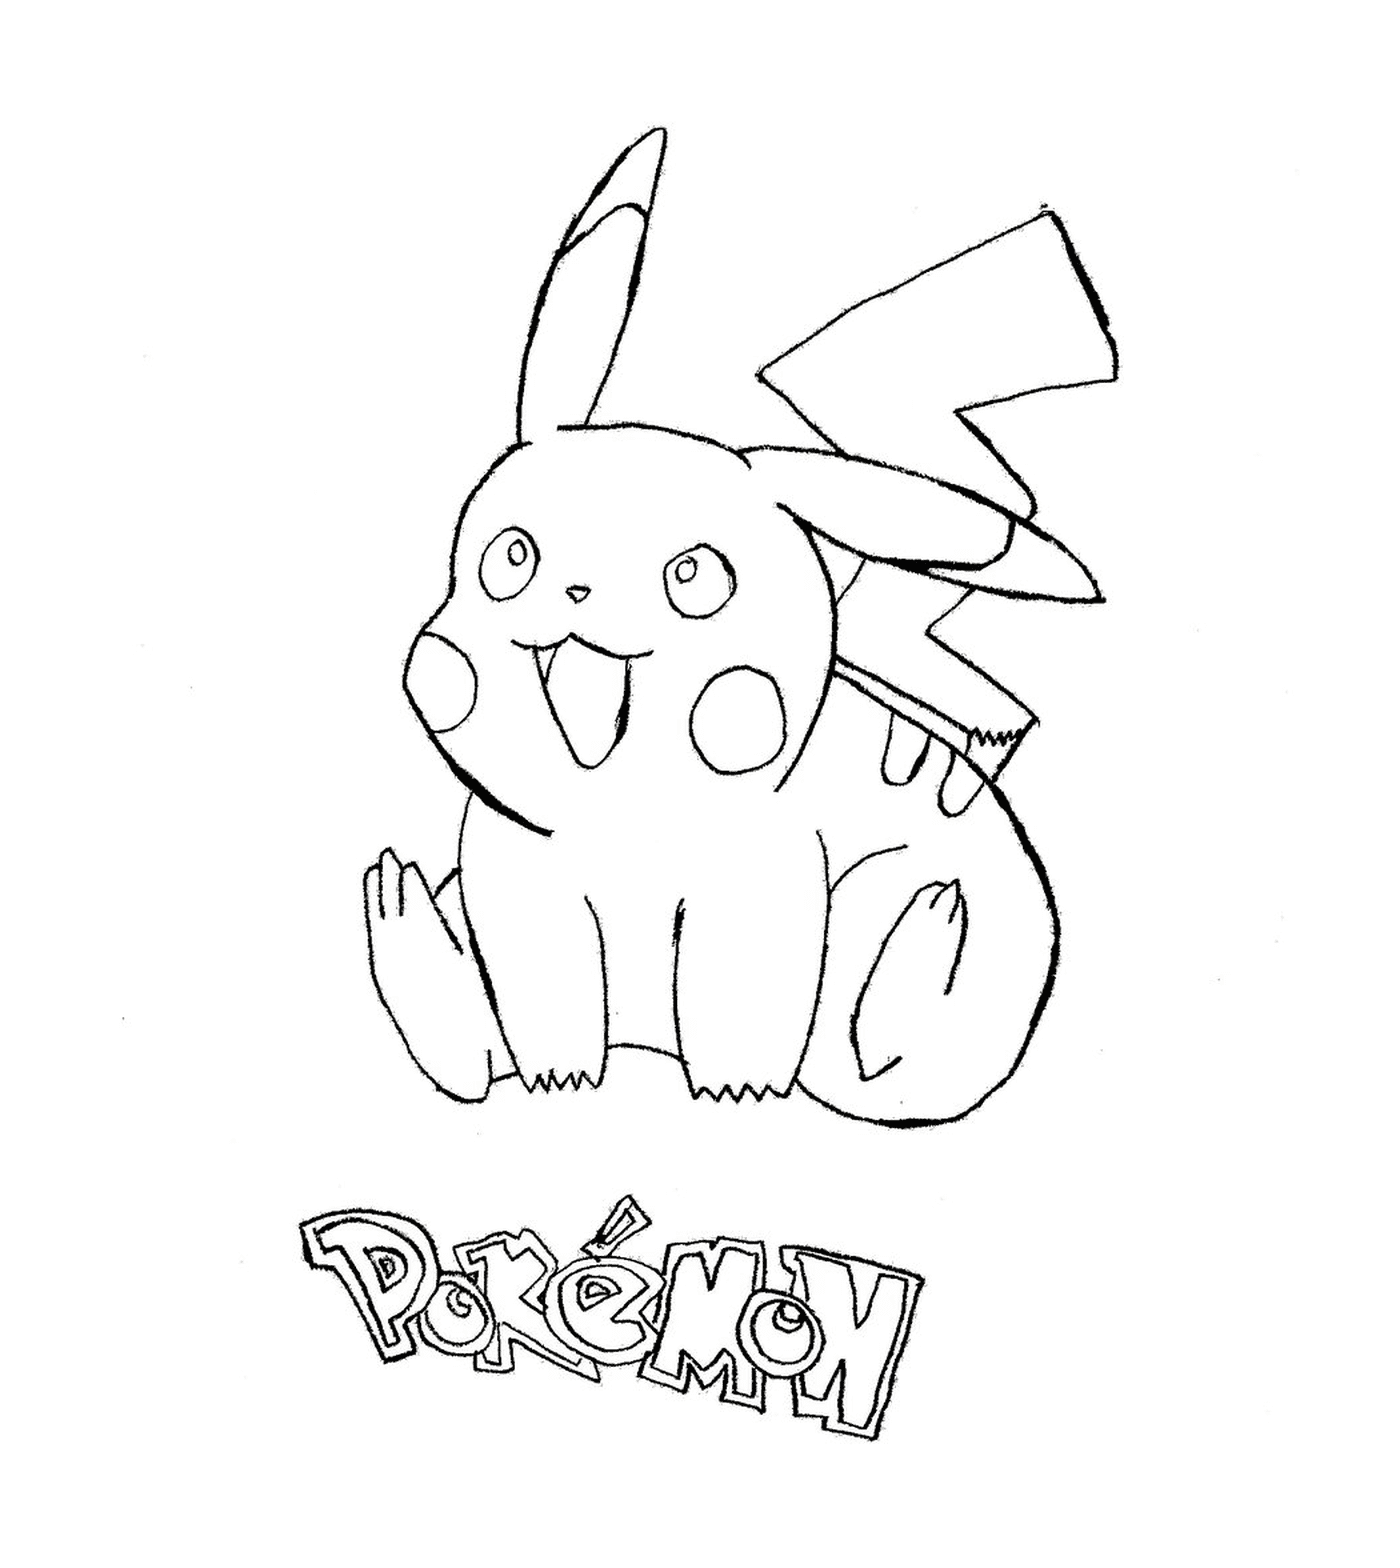  Pikachu, um adorável Pokémon 